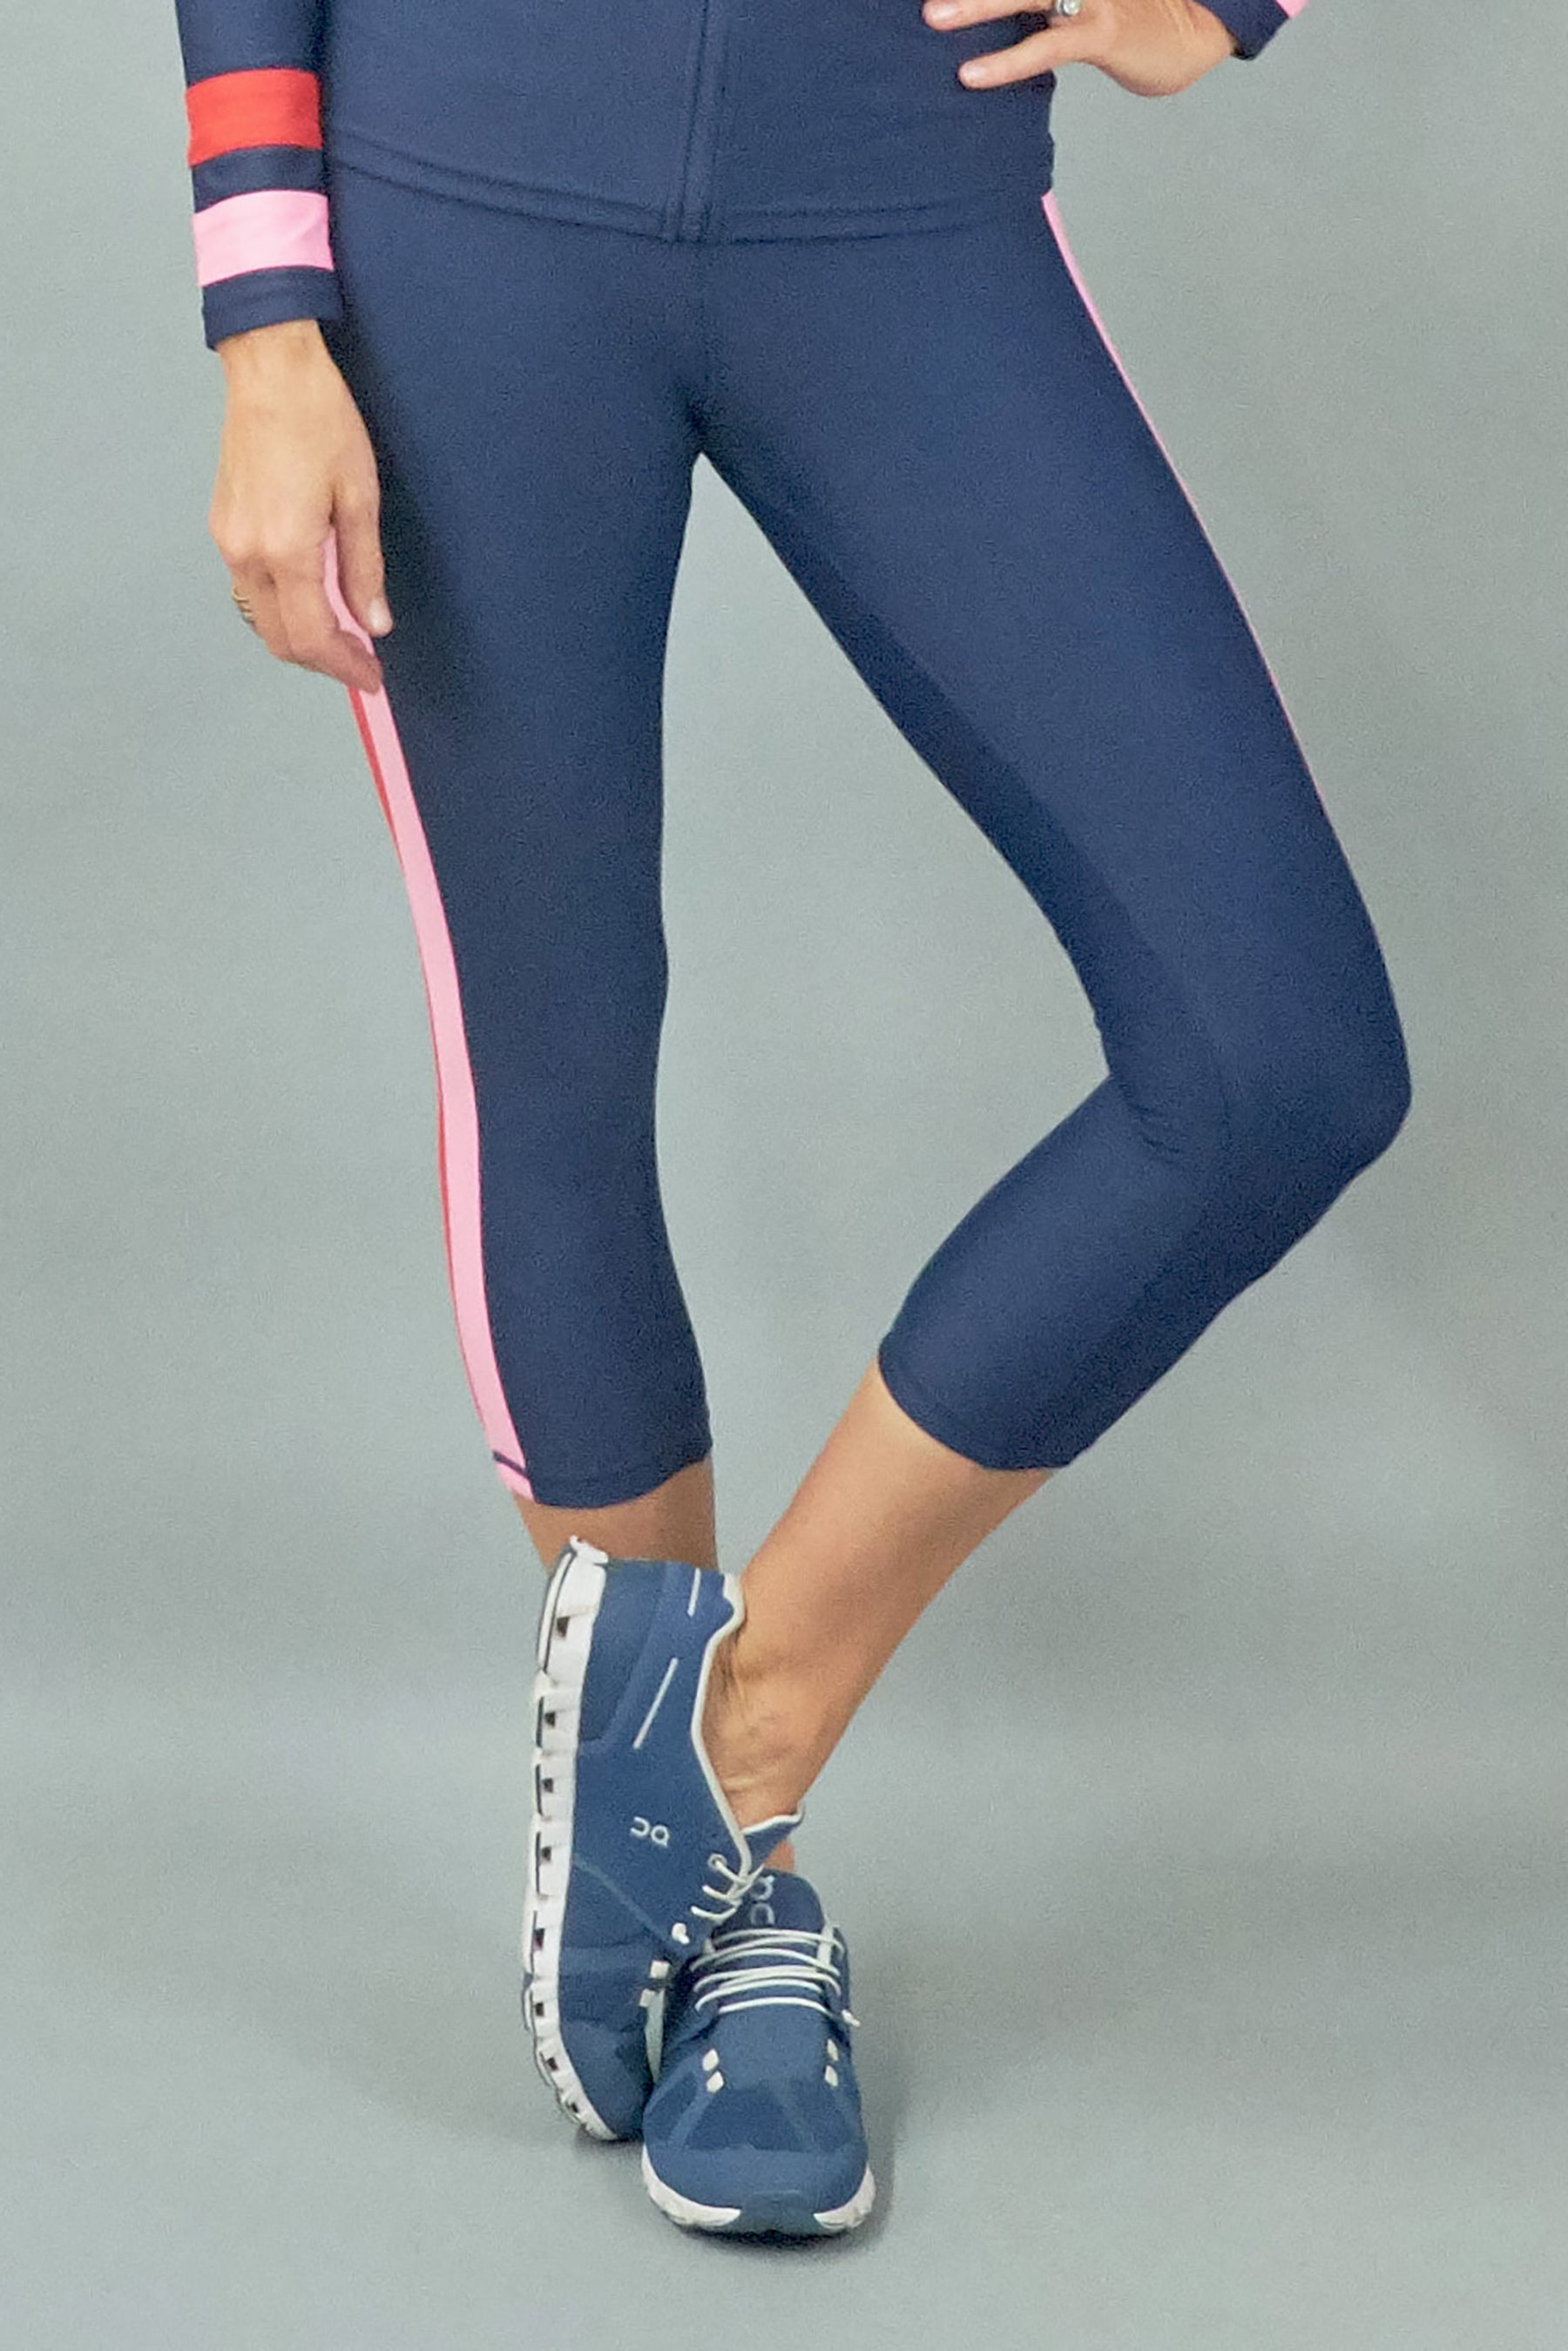 Lotus Spandex Athletic Leggings for Women